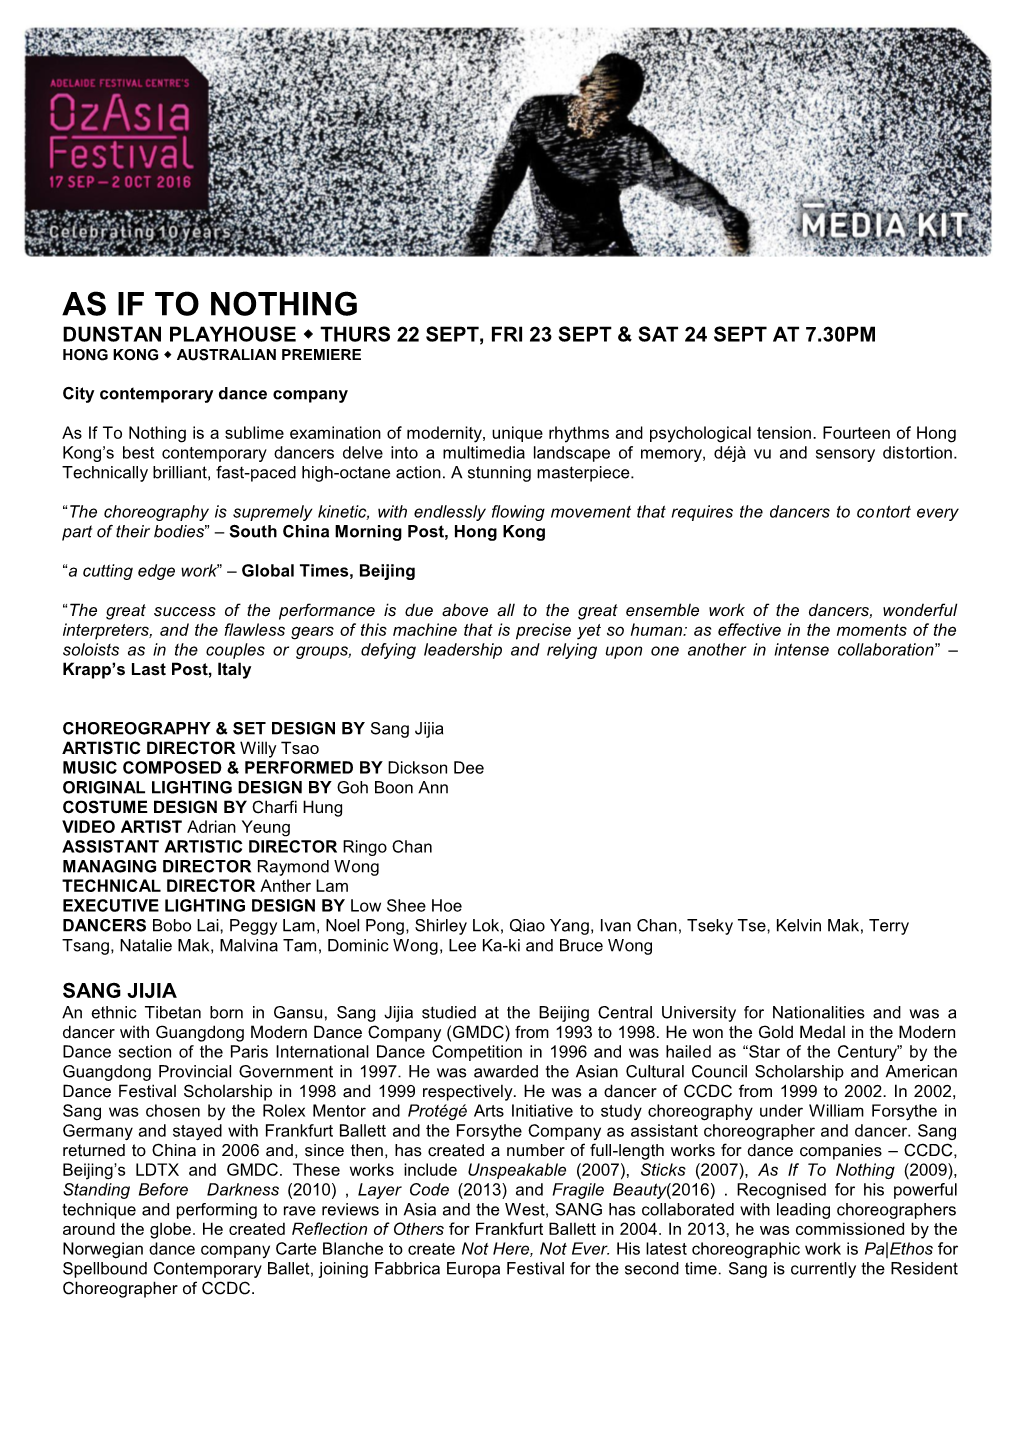 As If to Nothing Dunstan Playhouse  Thurs 22 Sept, Fri 23 Sept & Sat 24 Sept at 7.30Pm Hong Kong  Australian Premiere